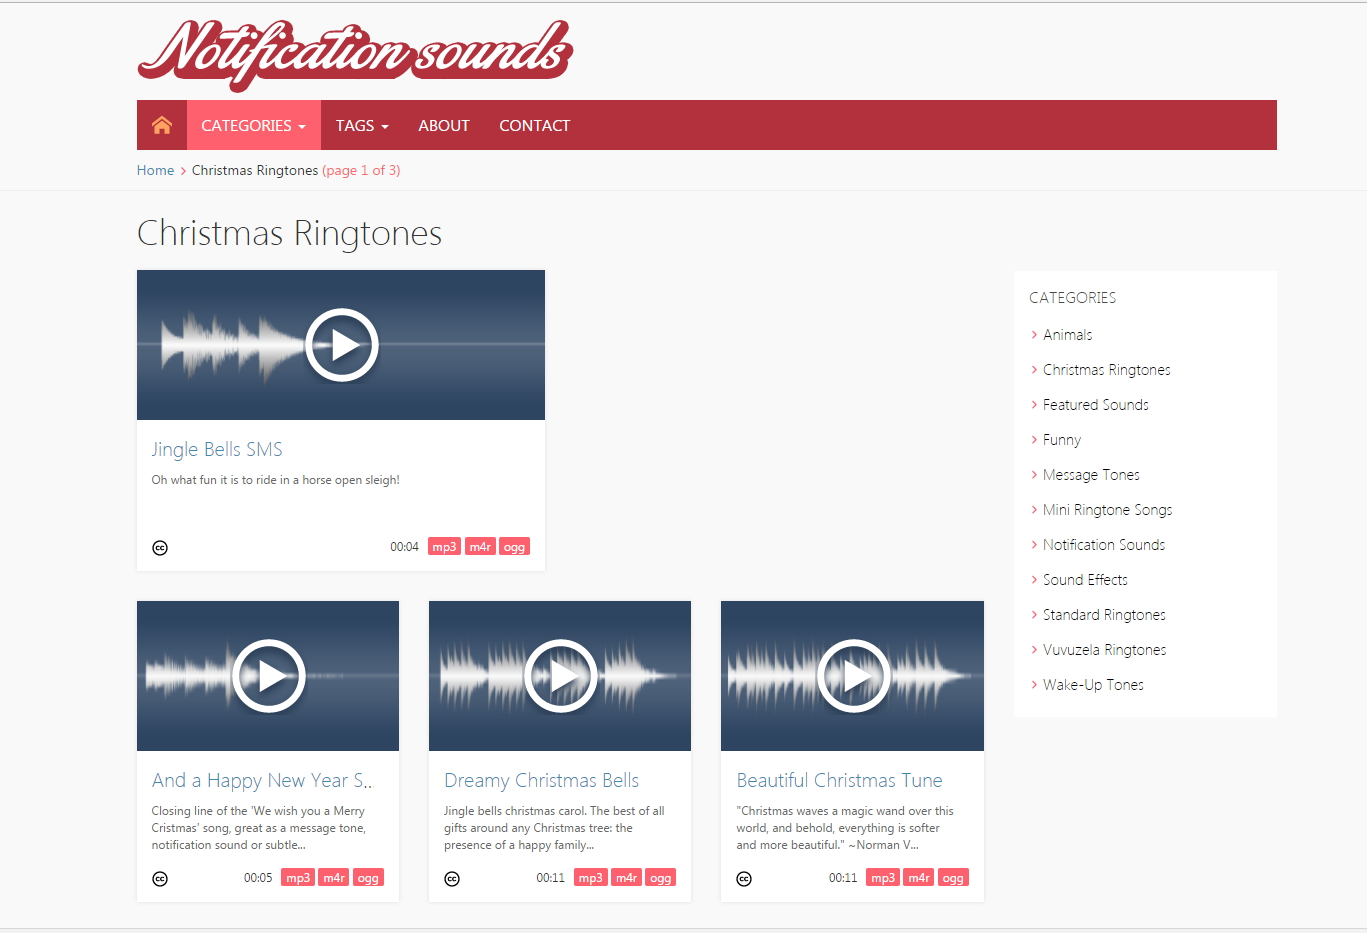 top websites to download Christmas Ringtones - Notification sounds